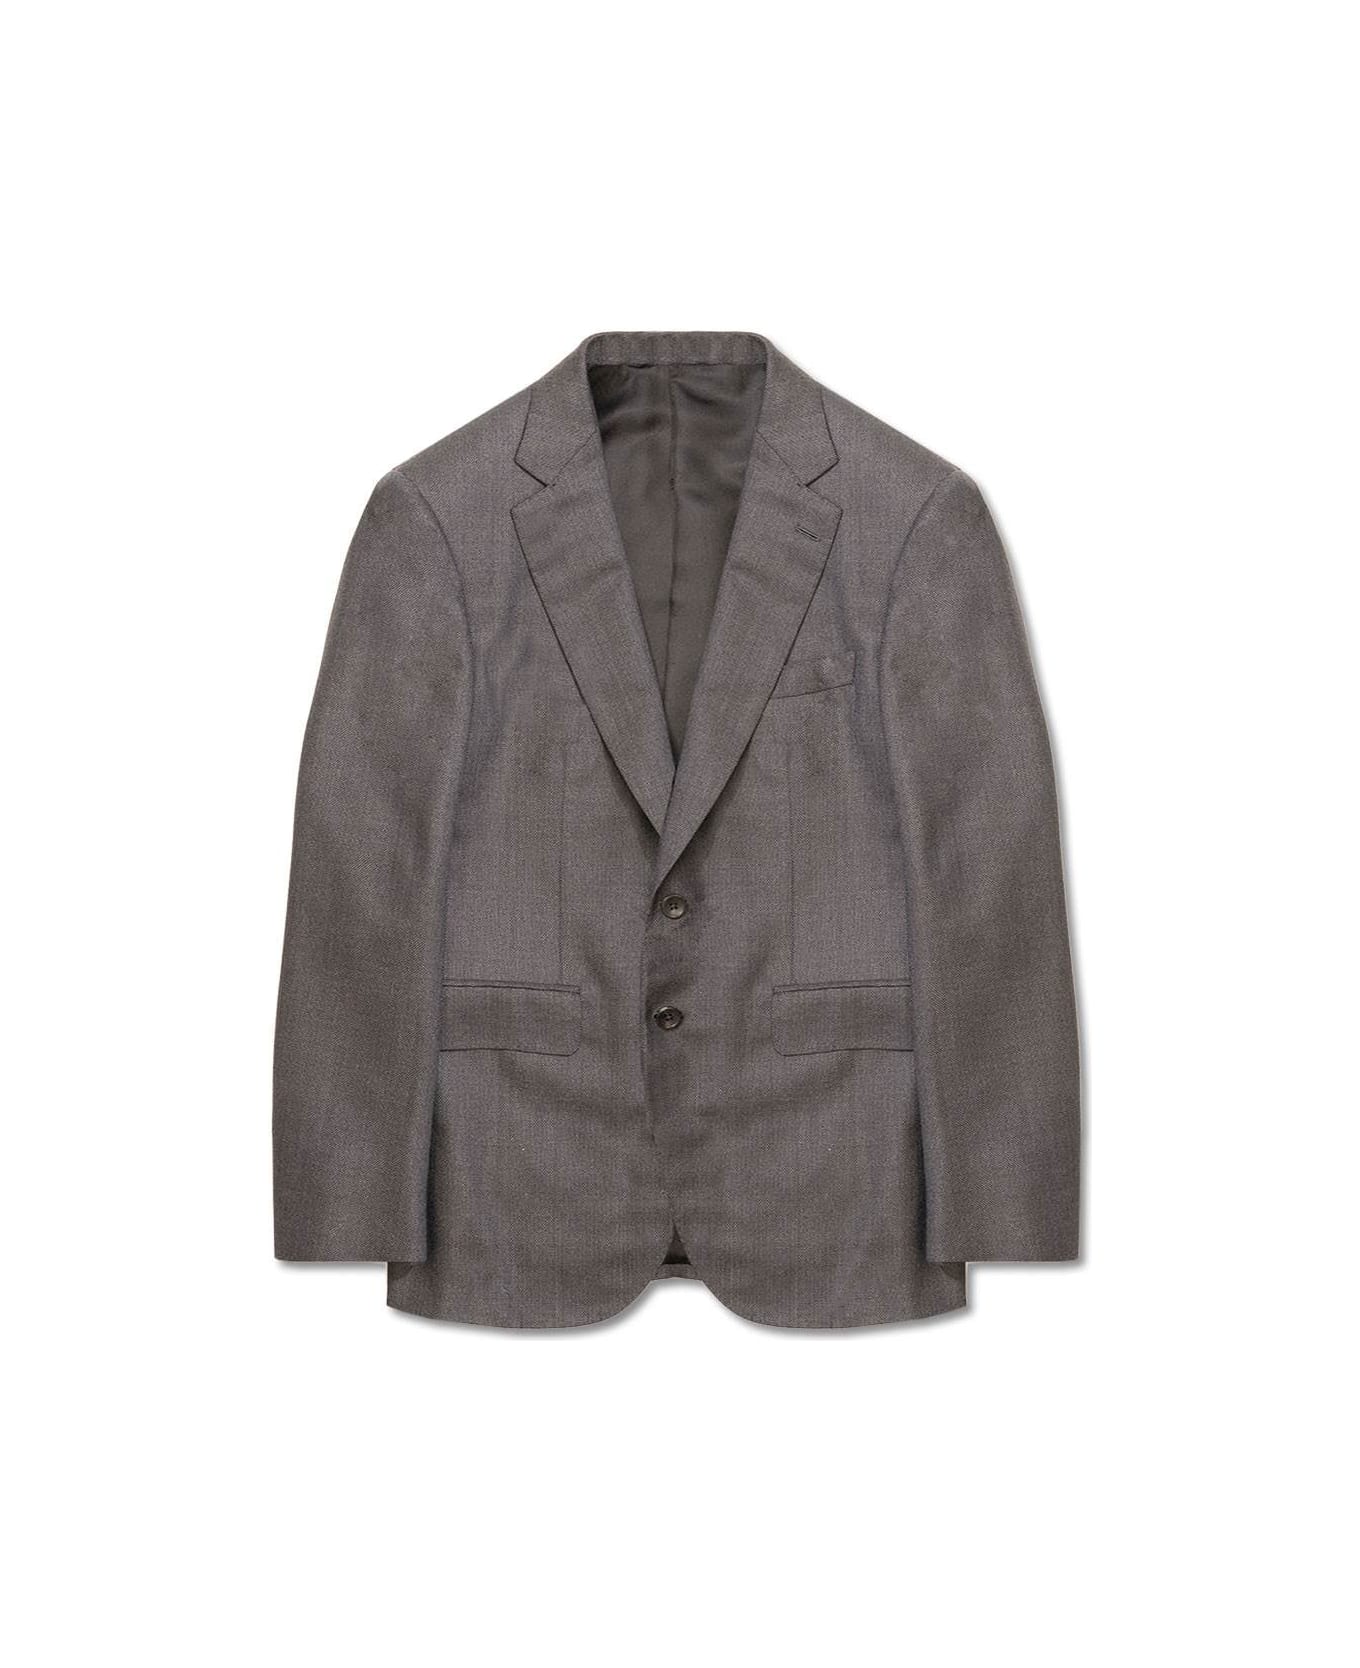 Larusmiani Windsor Suit Suit - DimGray